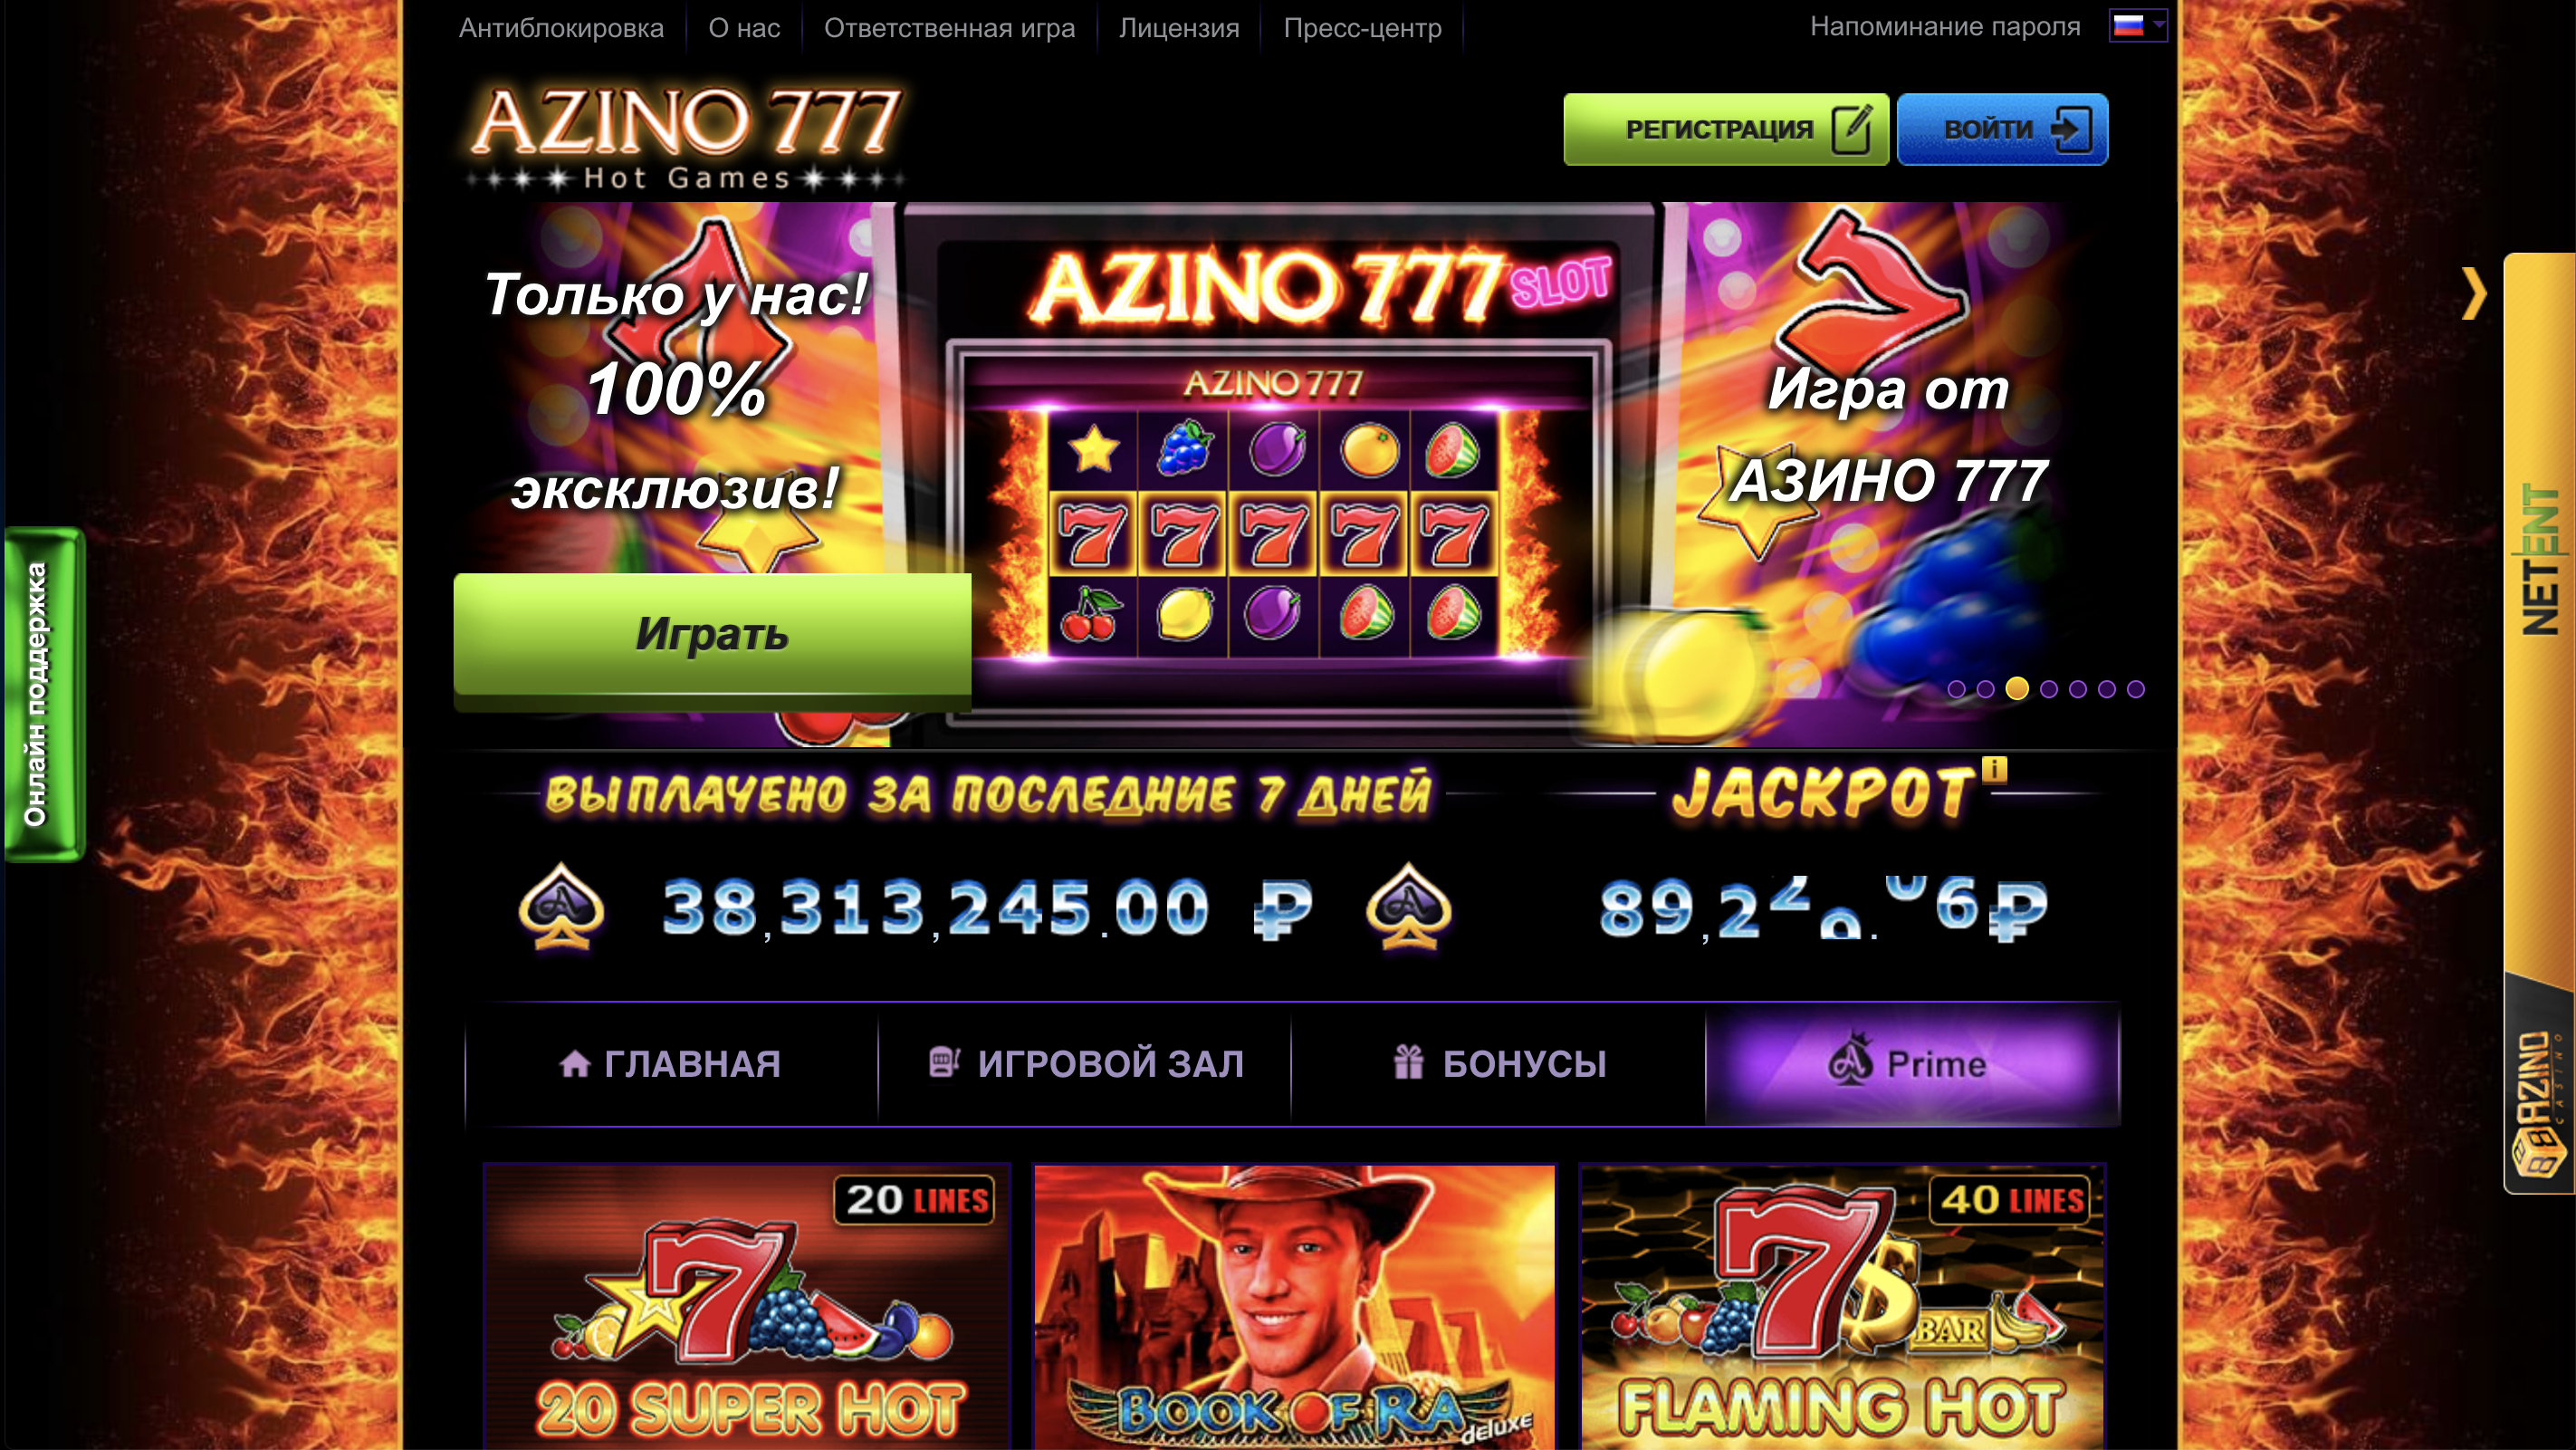 Azino777 ru site. Казино азино777 бездепозитный бонус. Азино777 казино зеркало. Казино три топора 777.